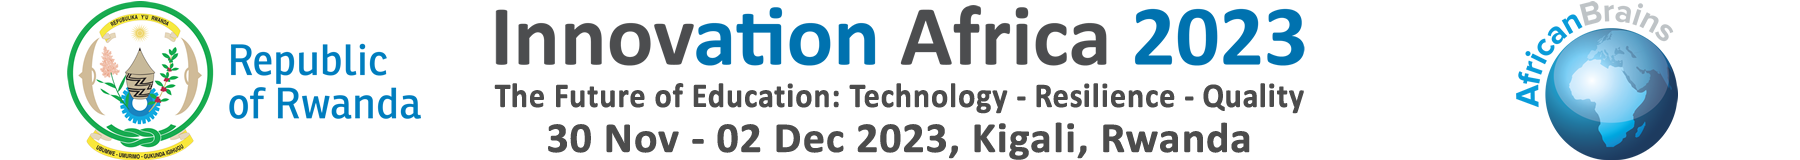 Innovation Africa 2023